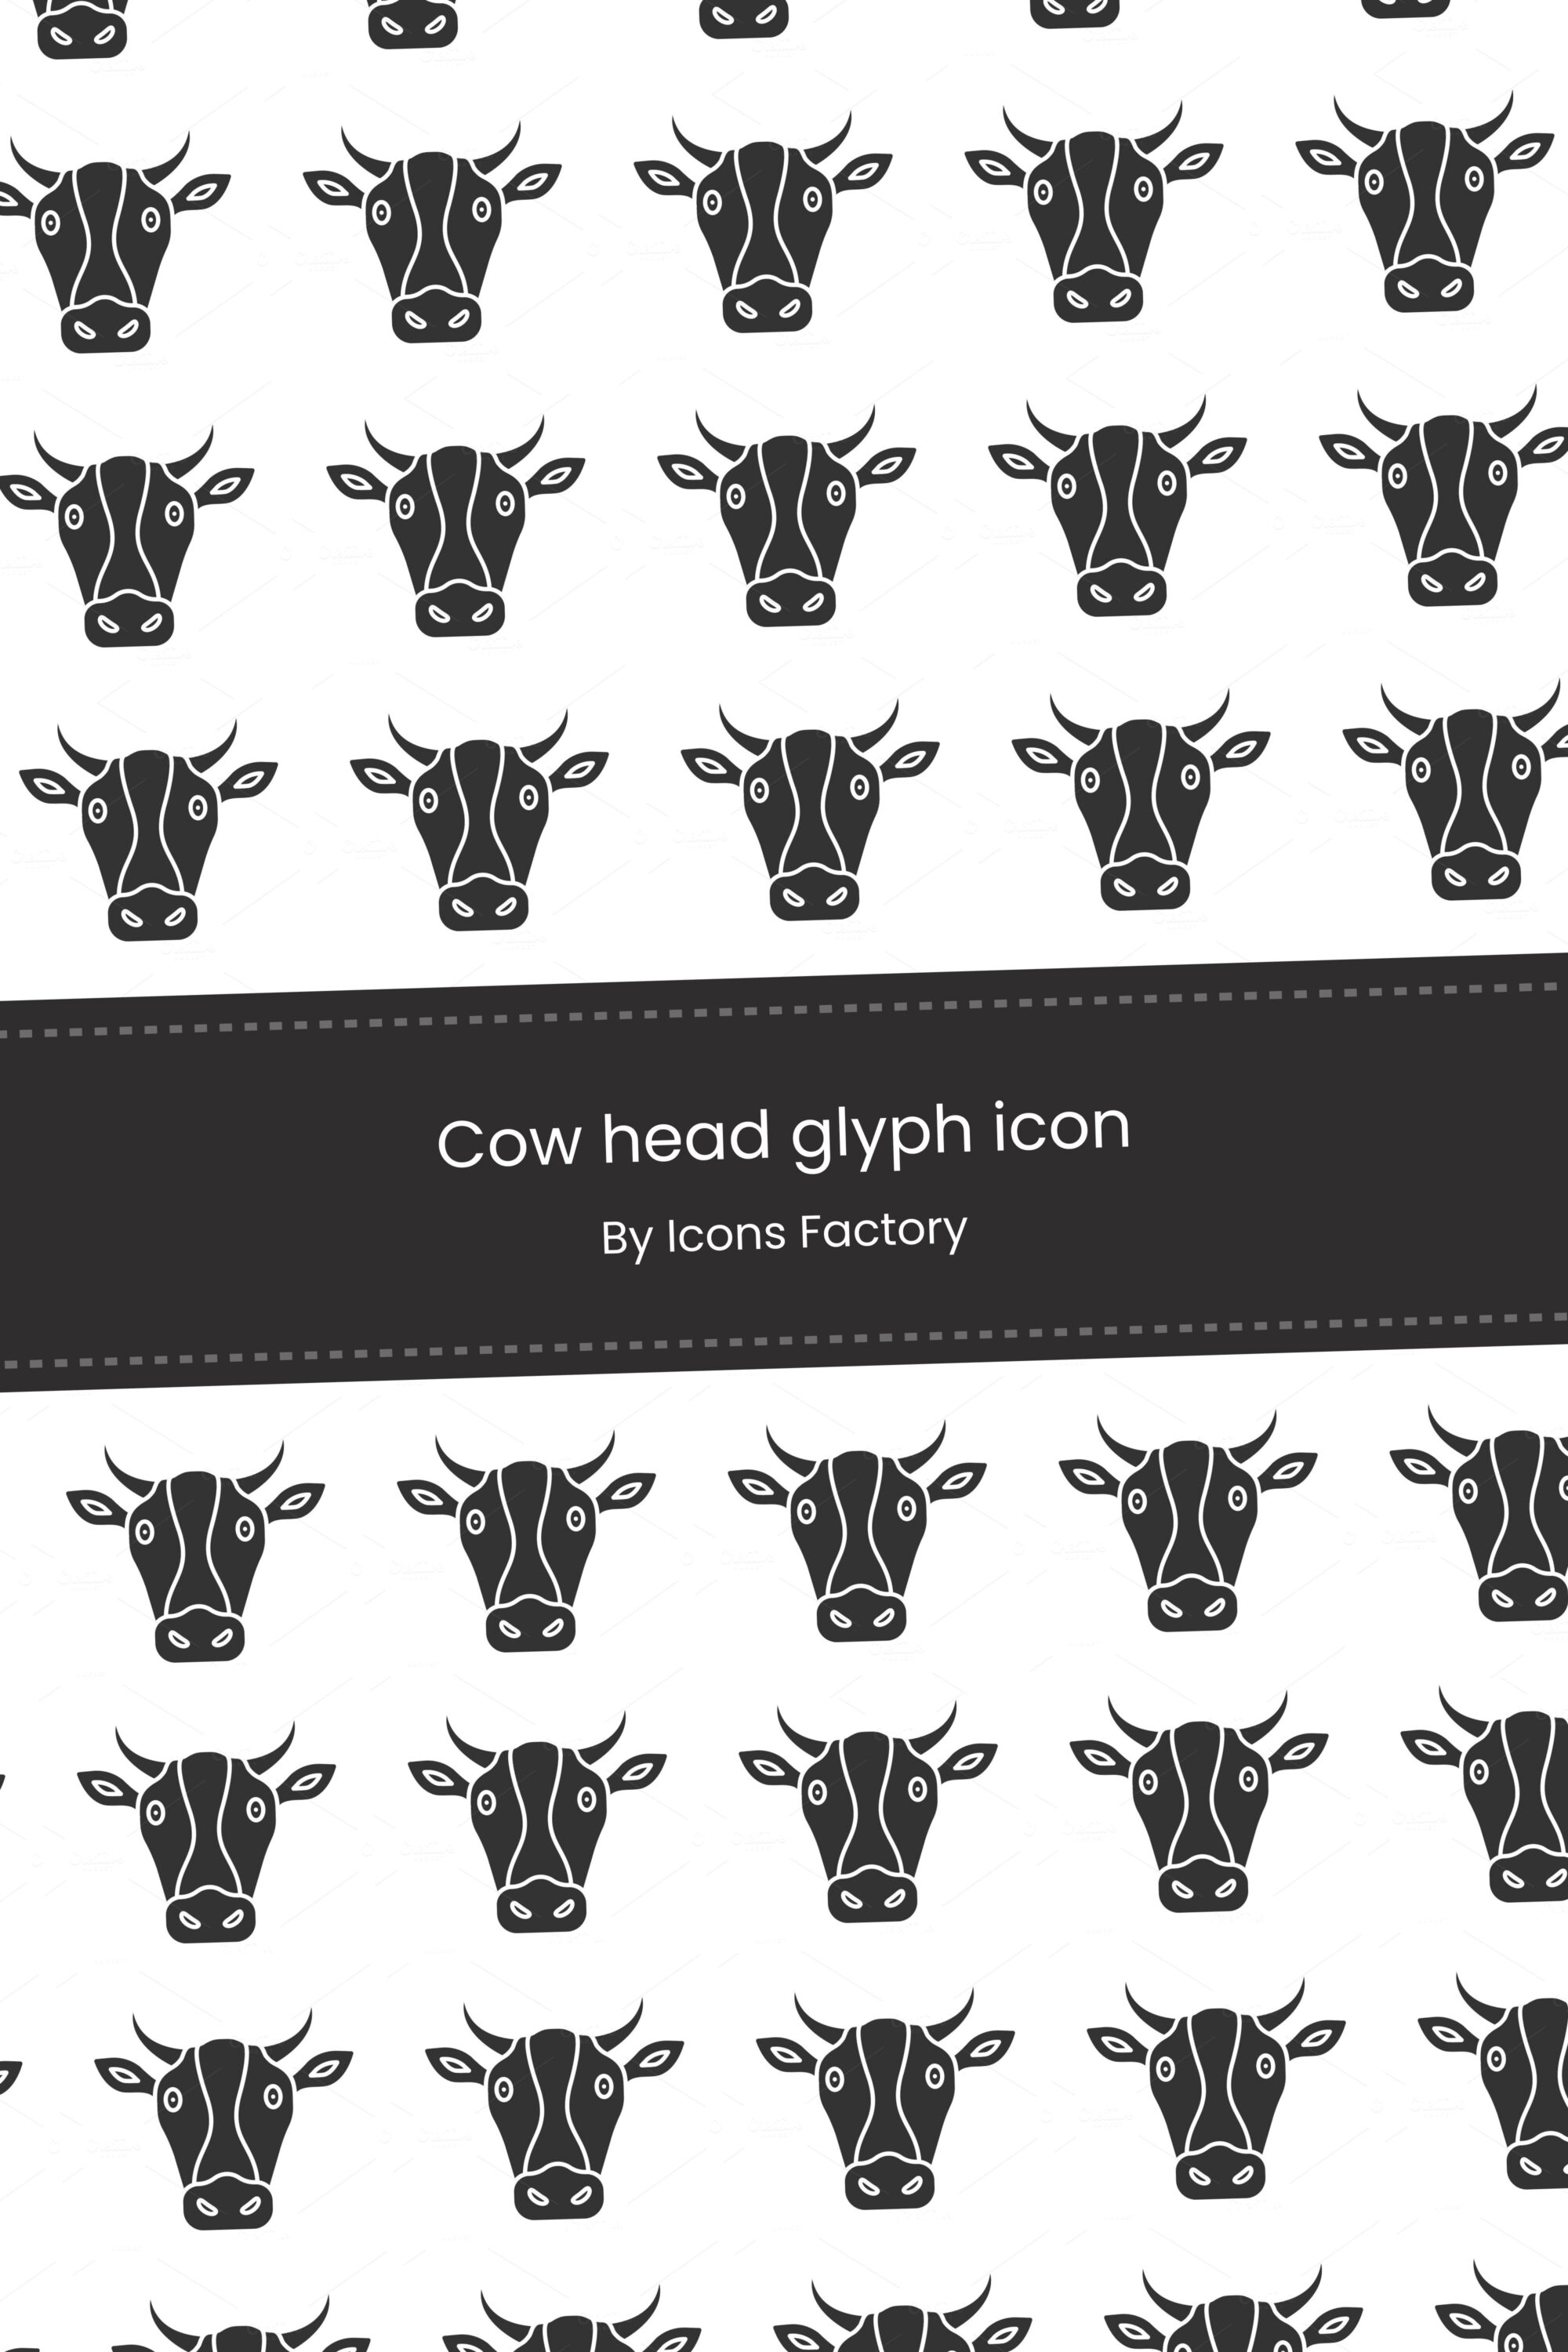 cow head glyph icon 03 282